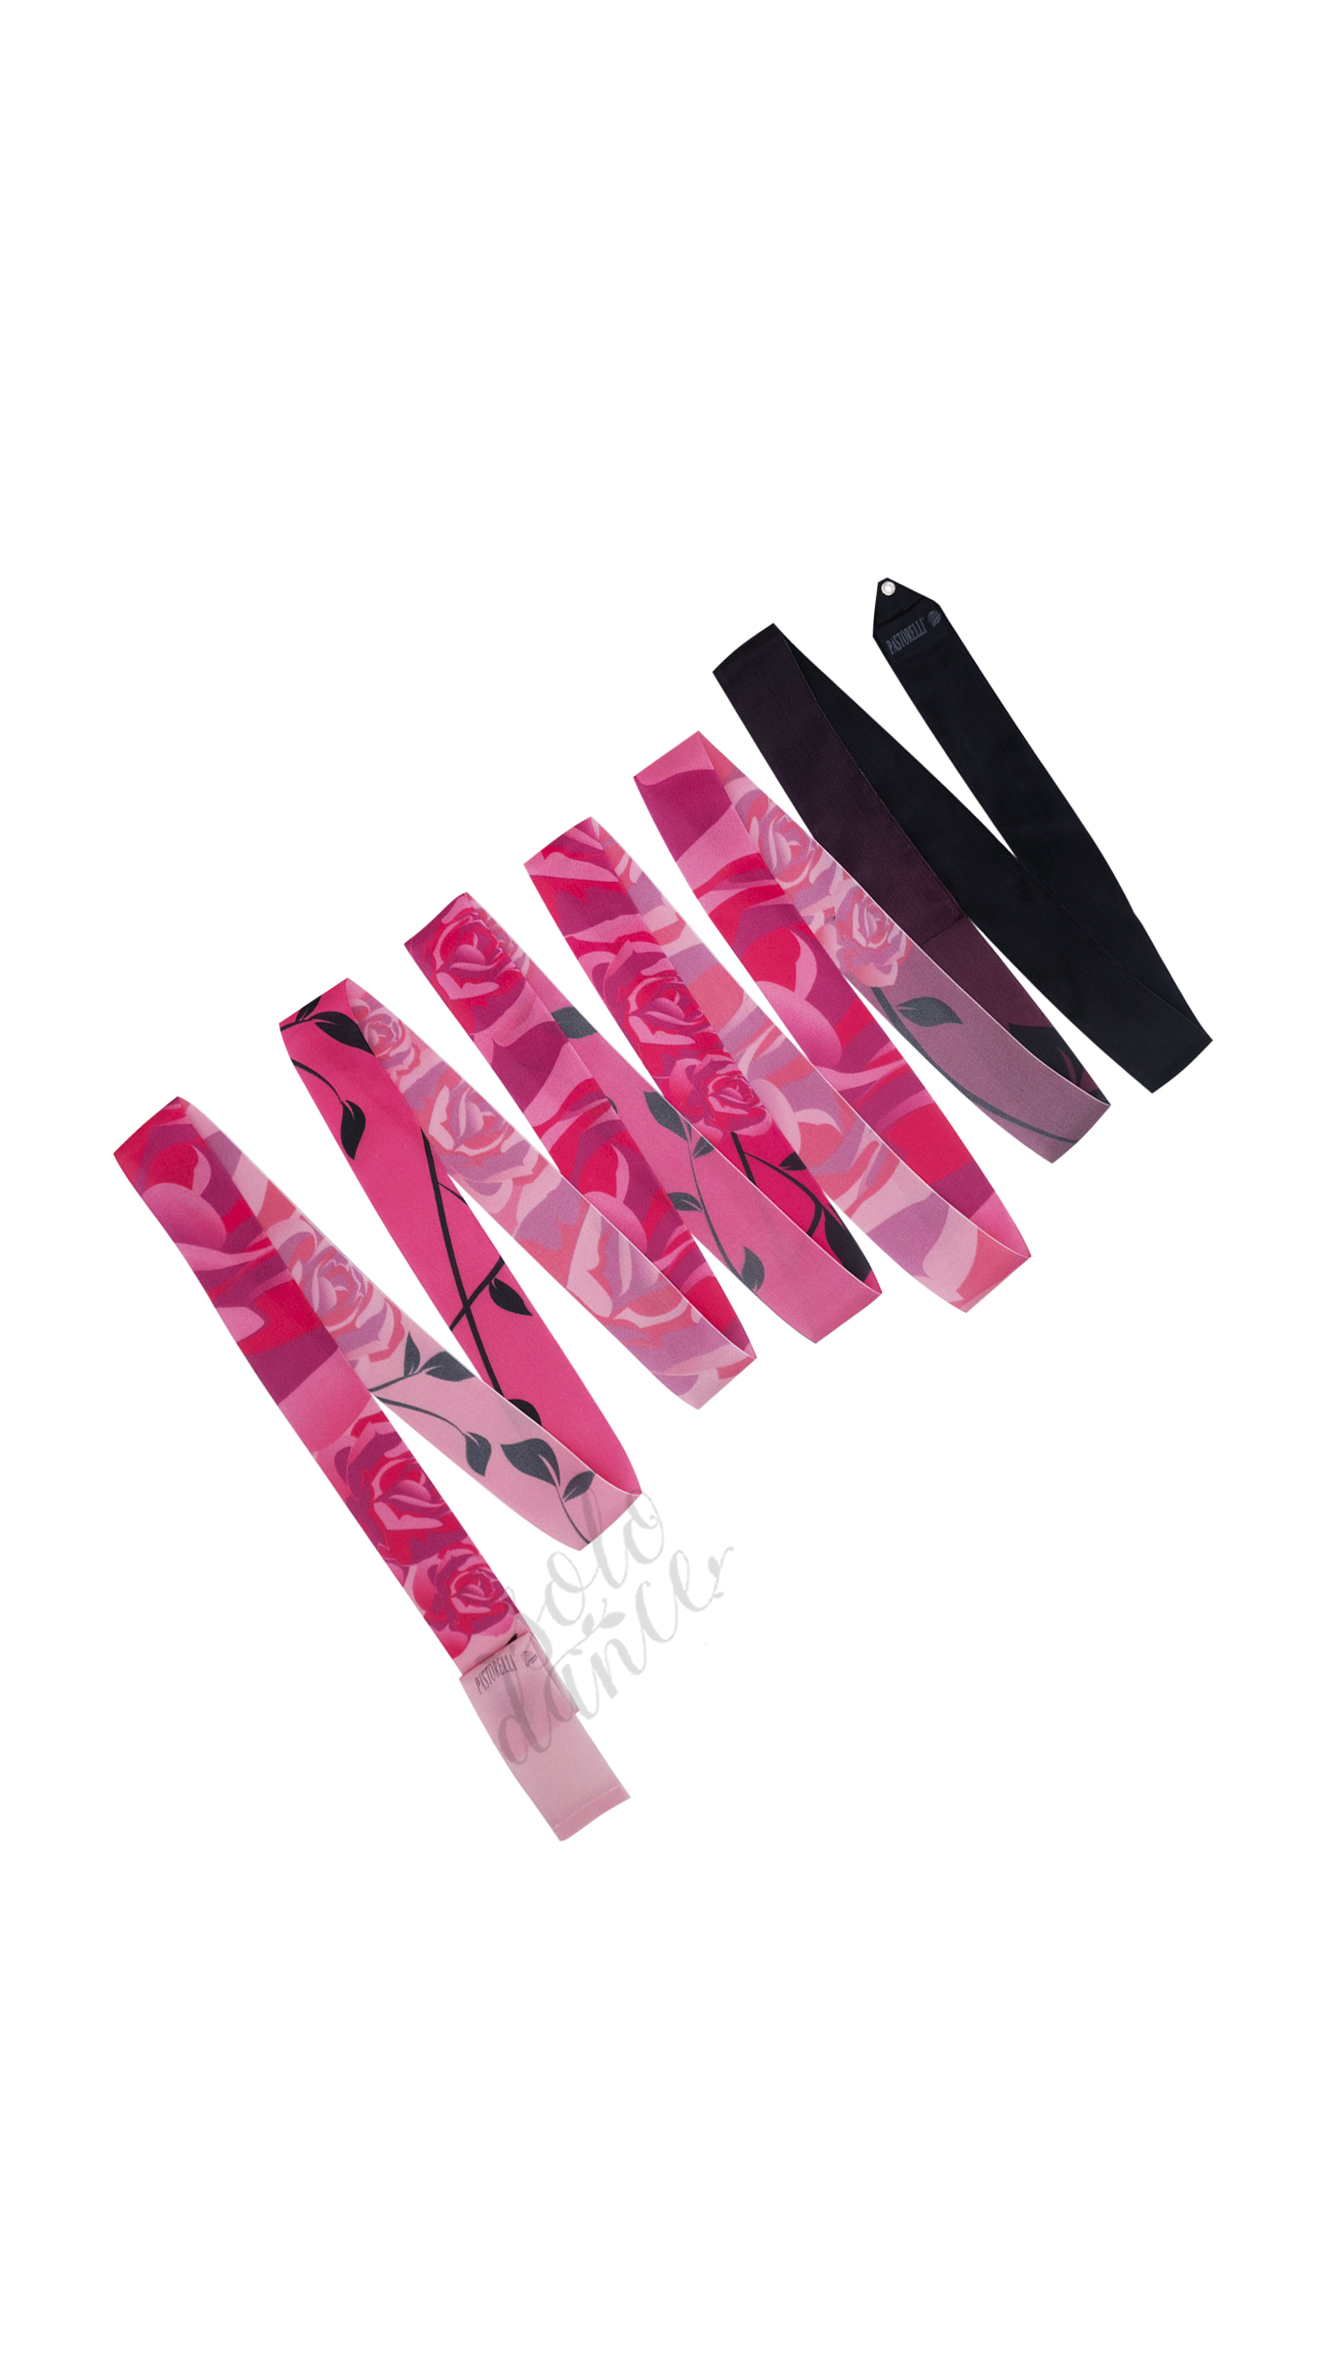 Pastorelli Luxury ARCHE' ROSES gymnastic ribbon 5 m 05984 Black-Red-Light pink FIG